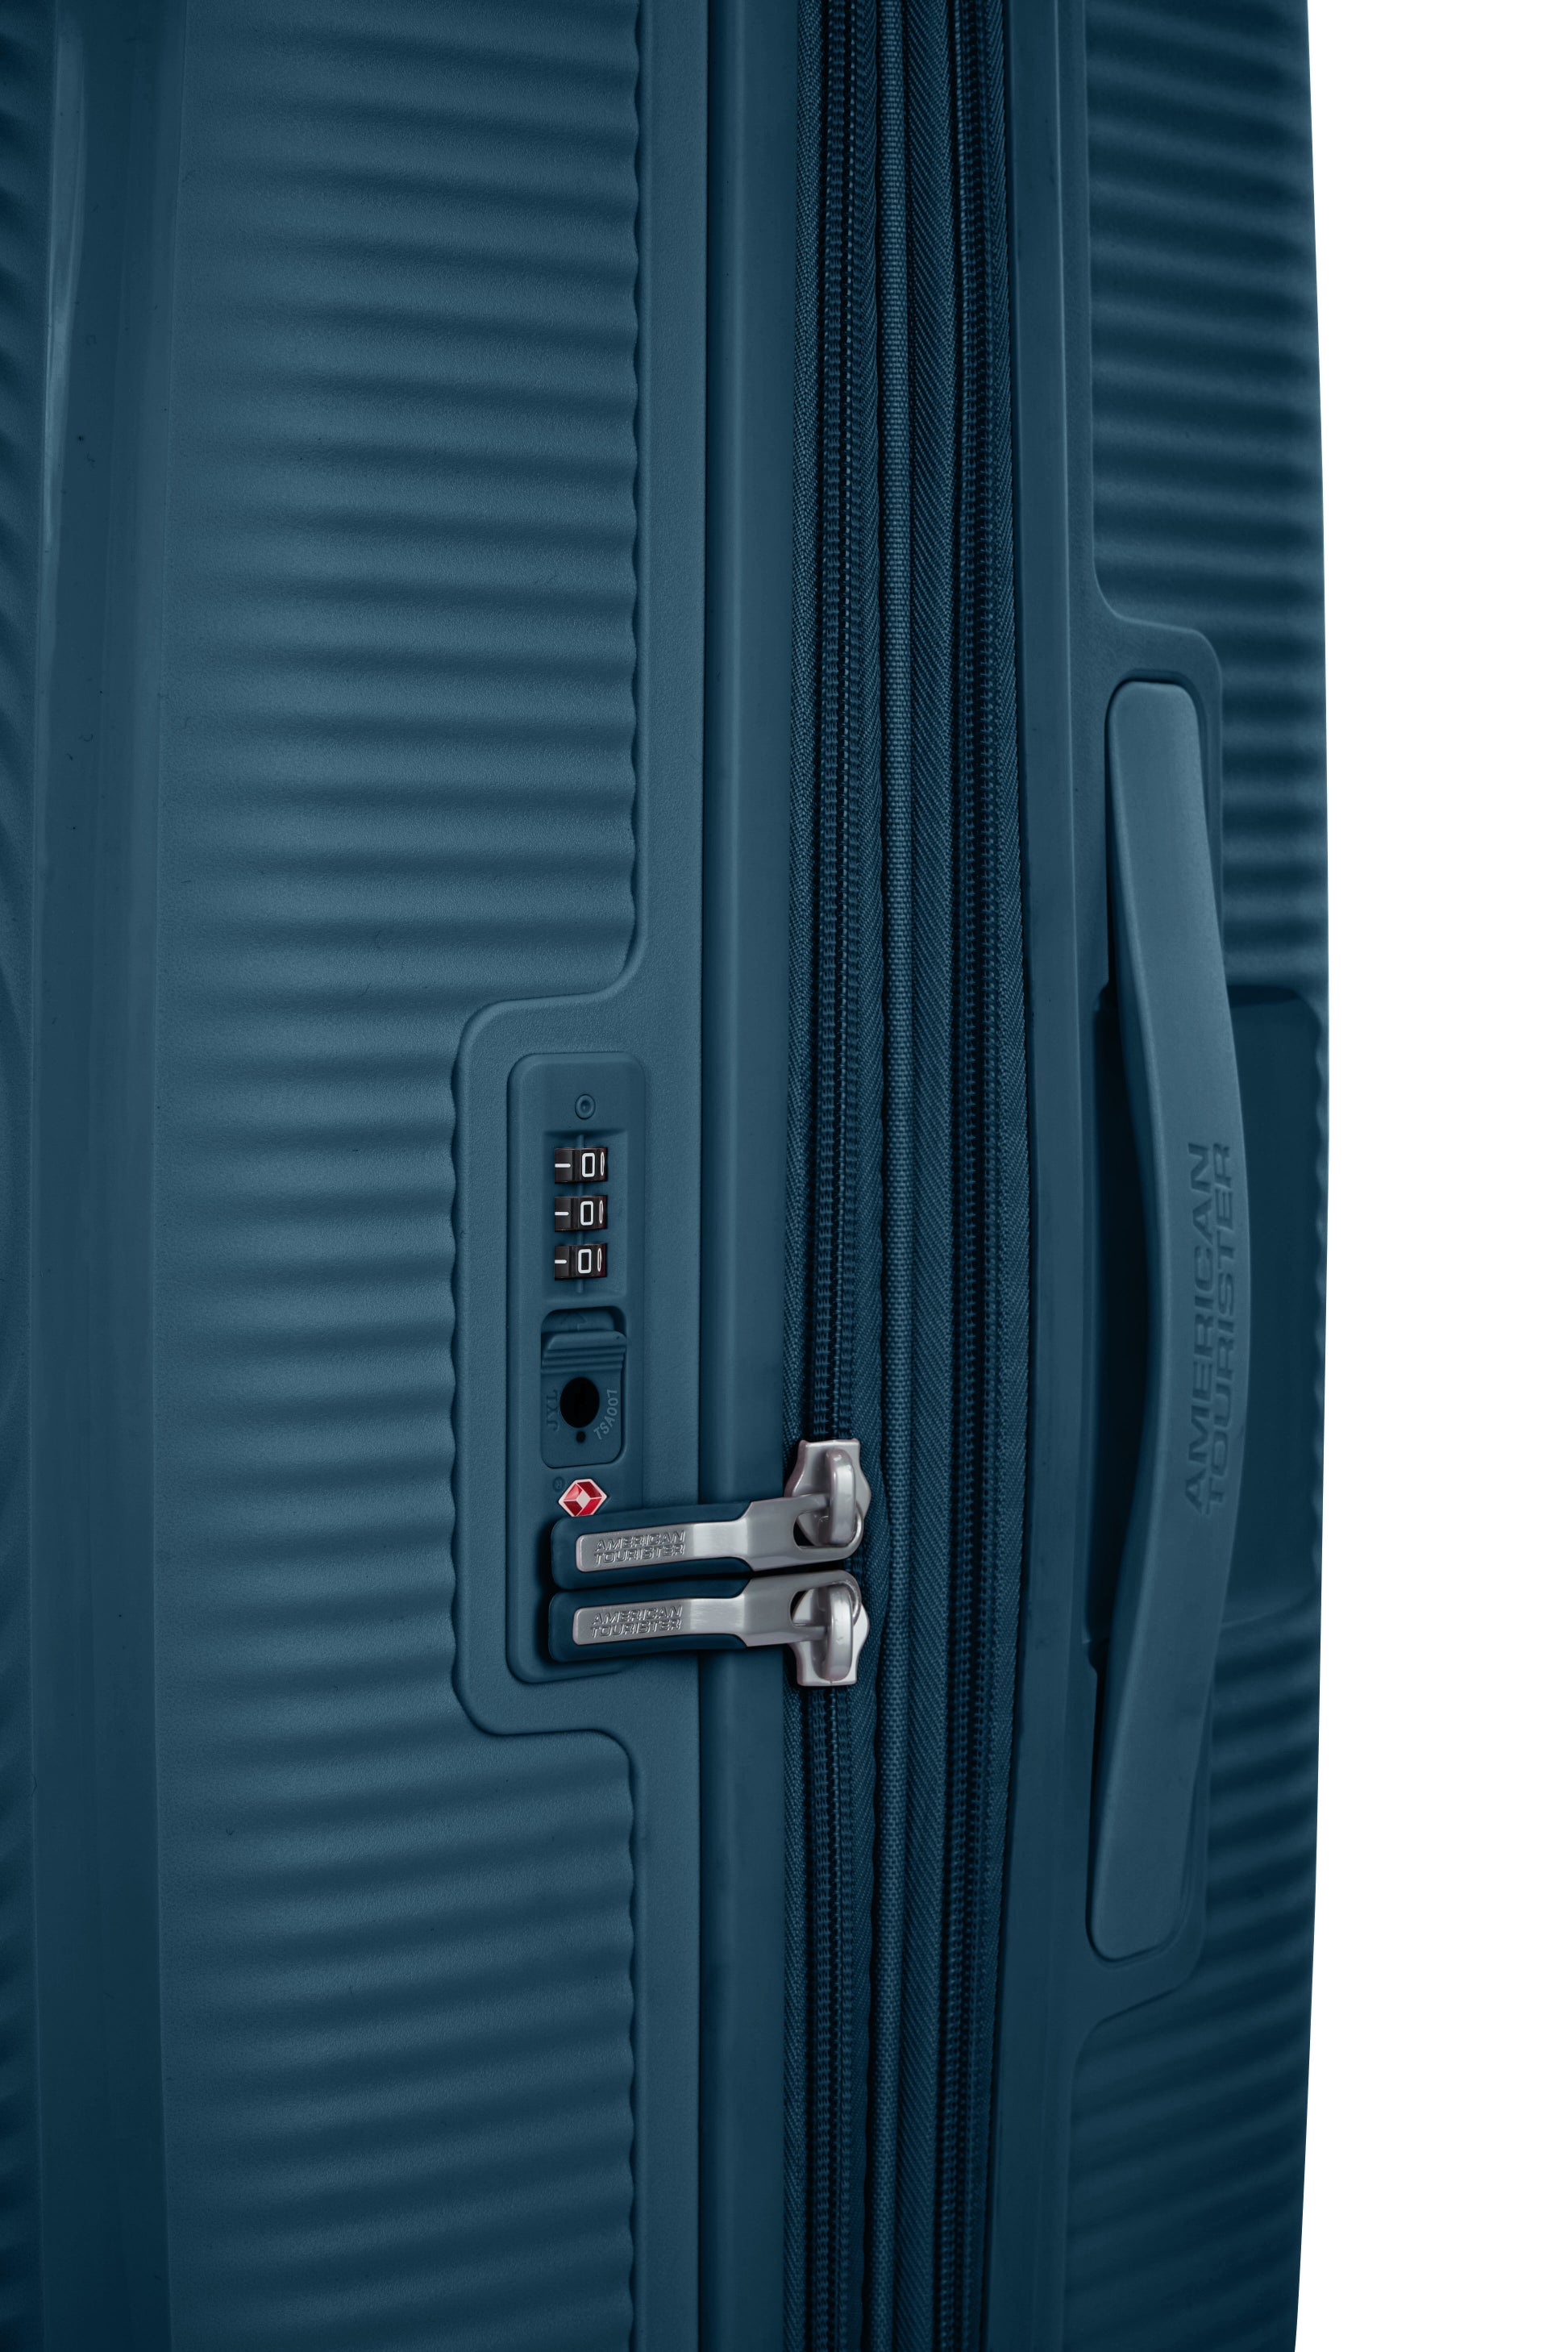 American Tourister - Curio 2.0 80cm Large Suitcase - Varsity Green-6